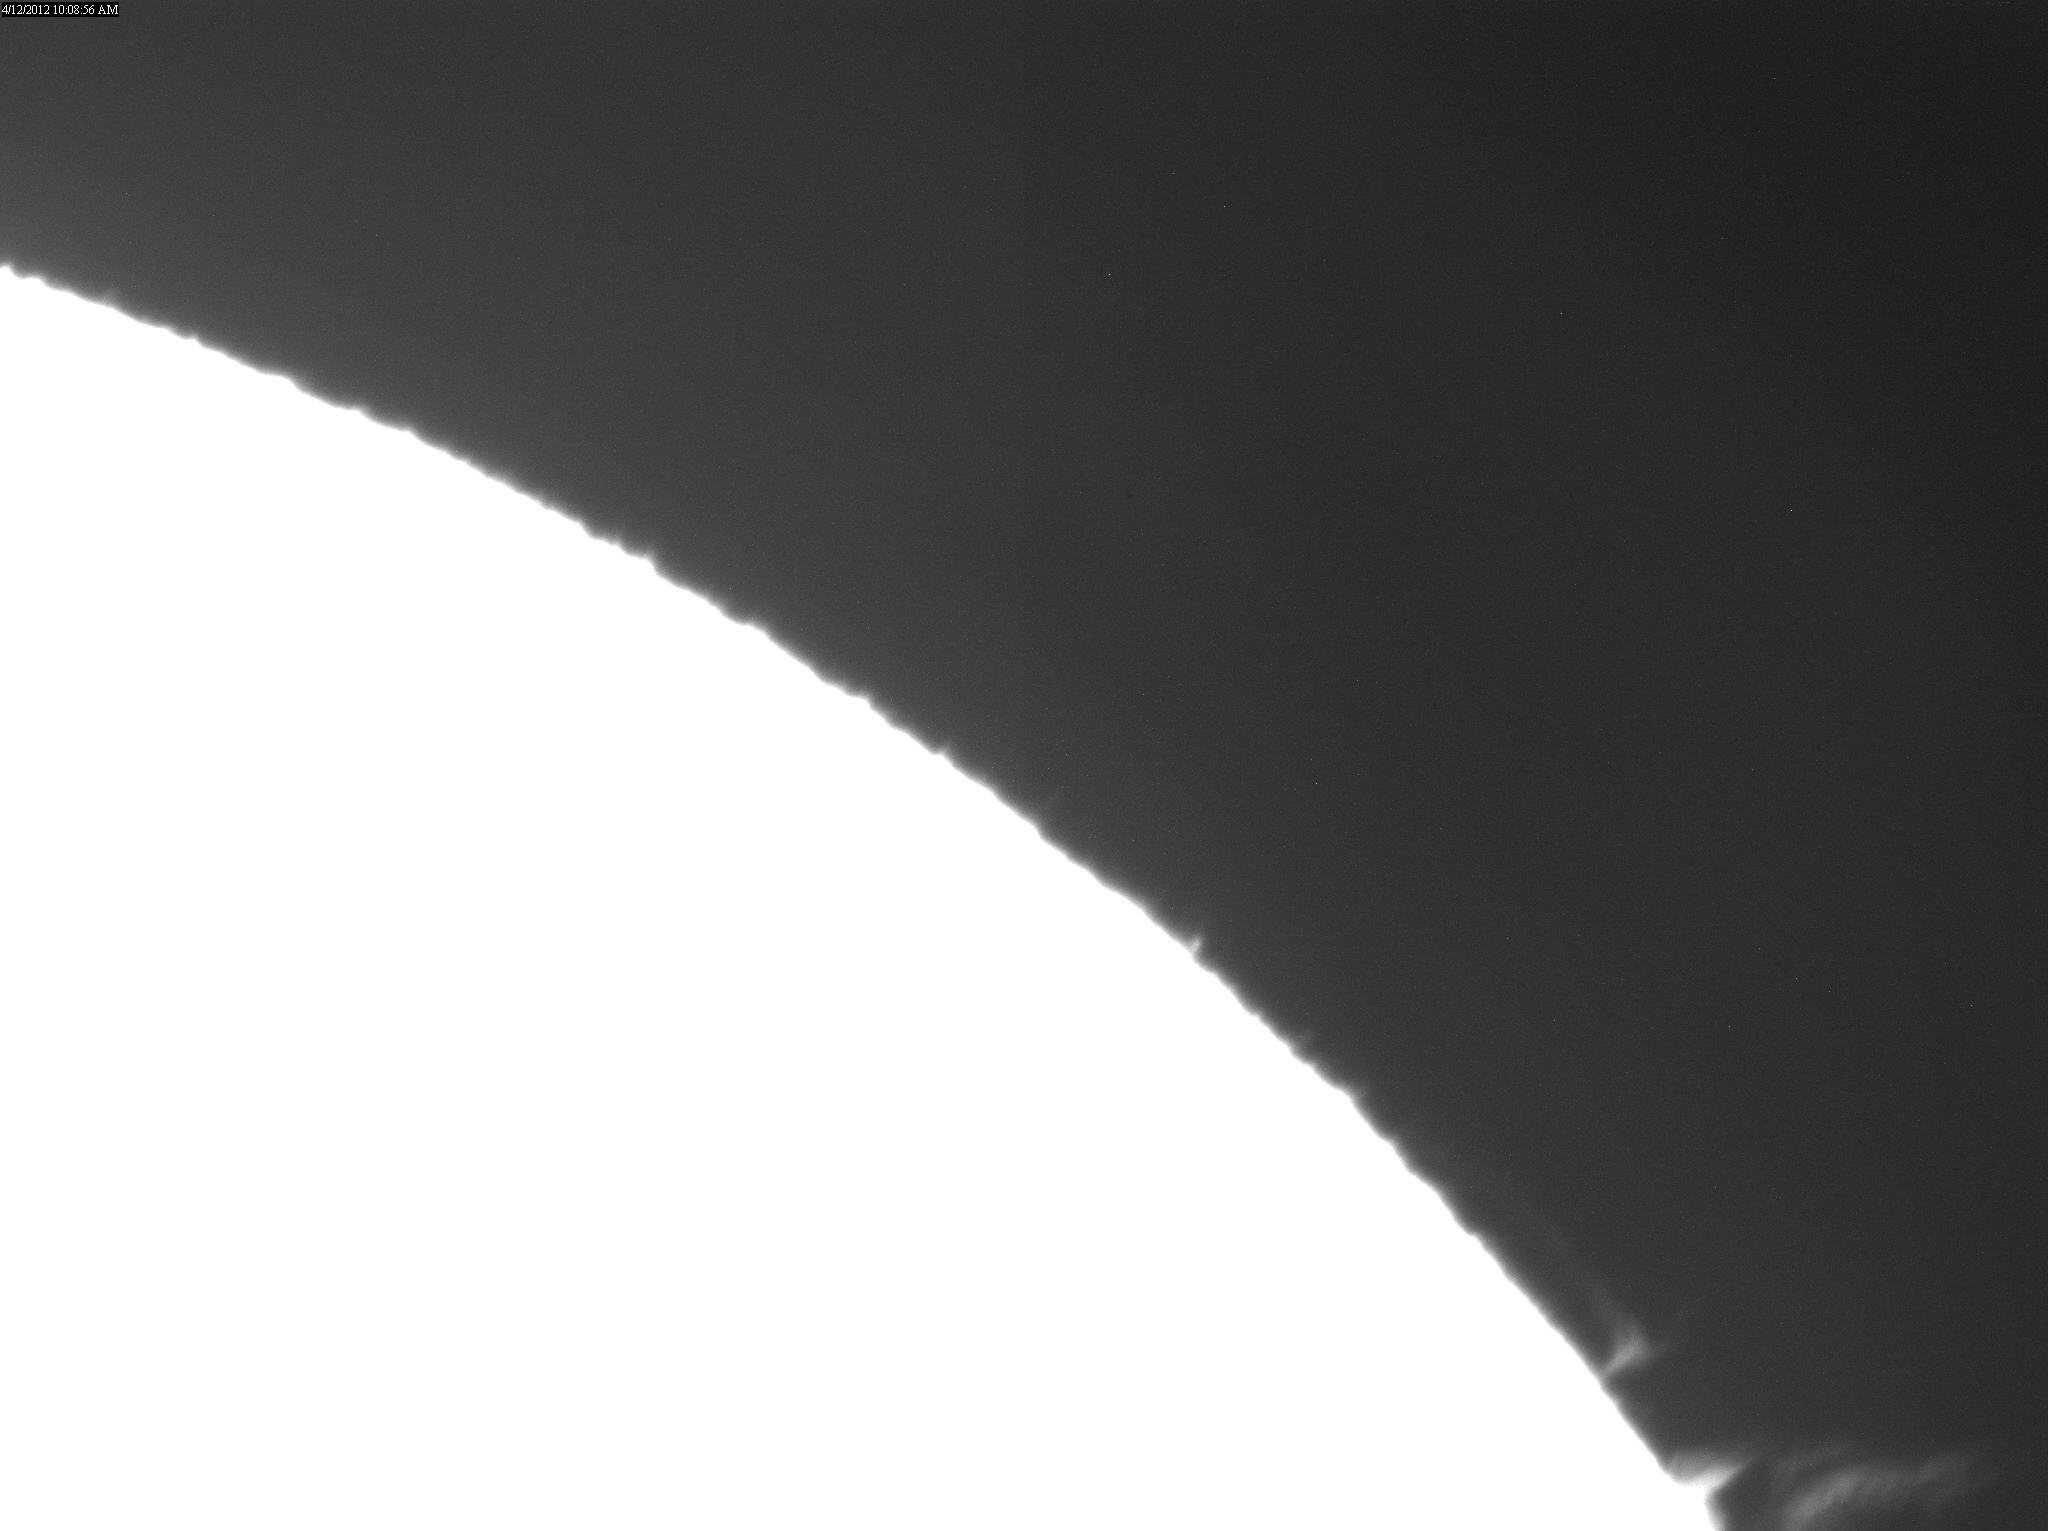 2012 Apr 12 Sun - prominence on the north-east limb